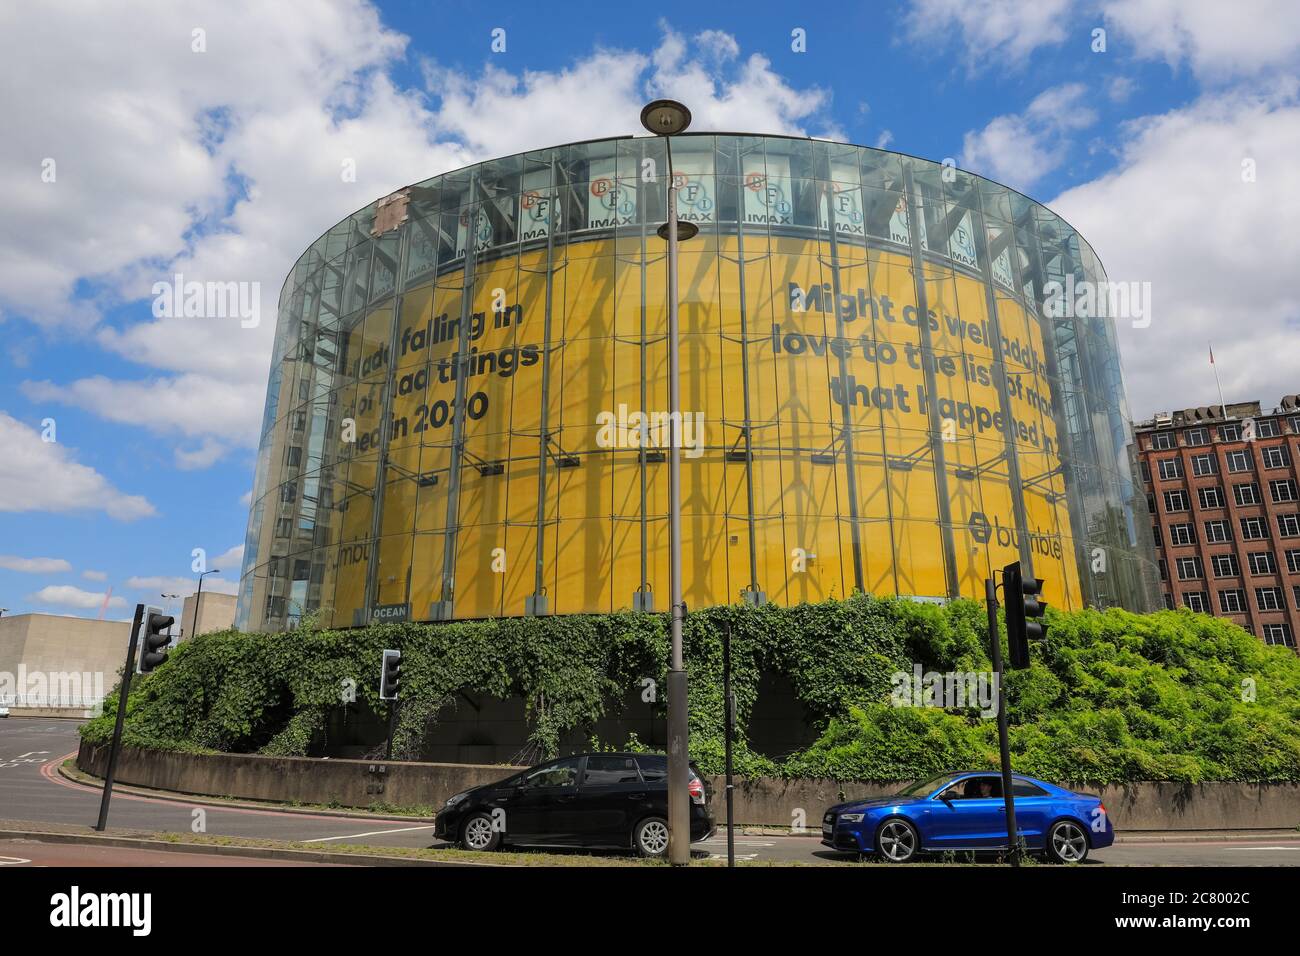 The Odeon BFI IMAX cinema round exterior in Waterloo, London, England, UK Stock Photo